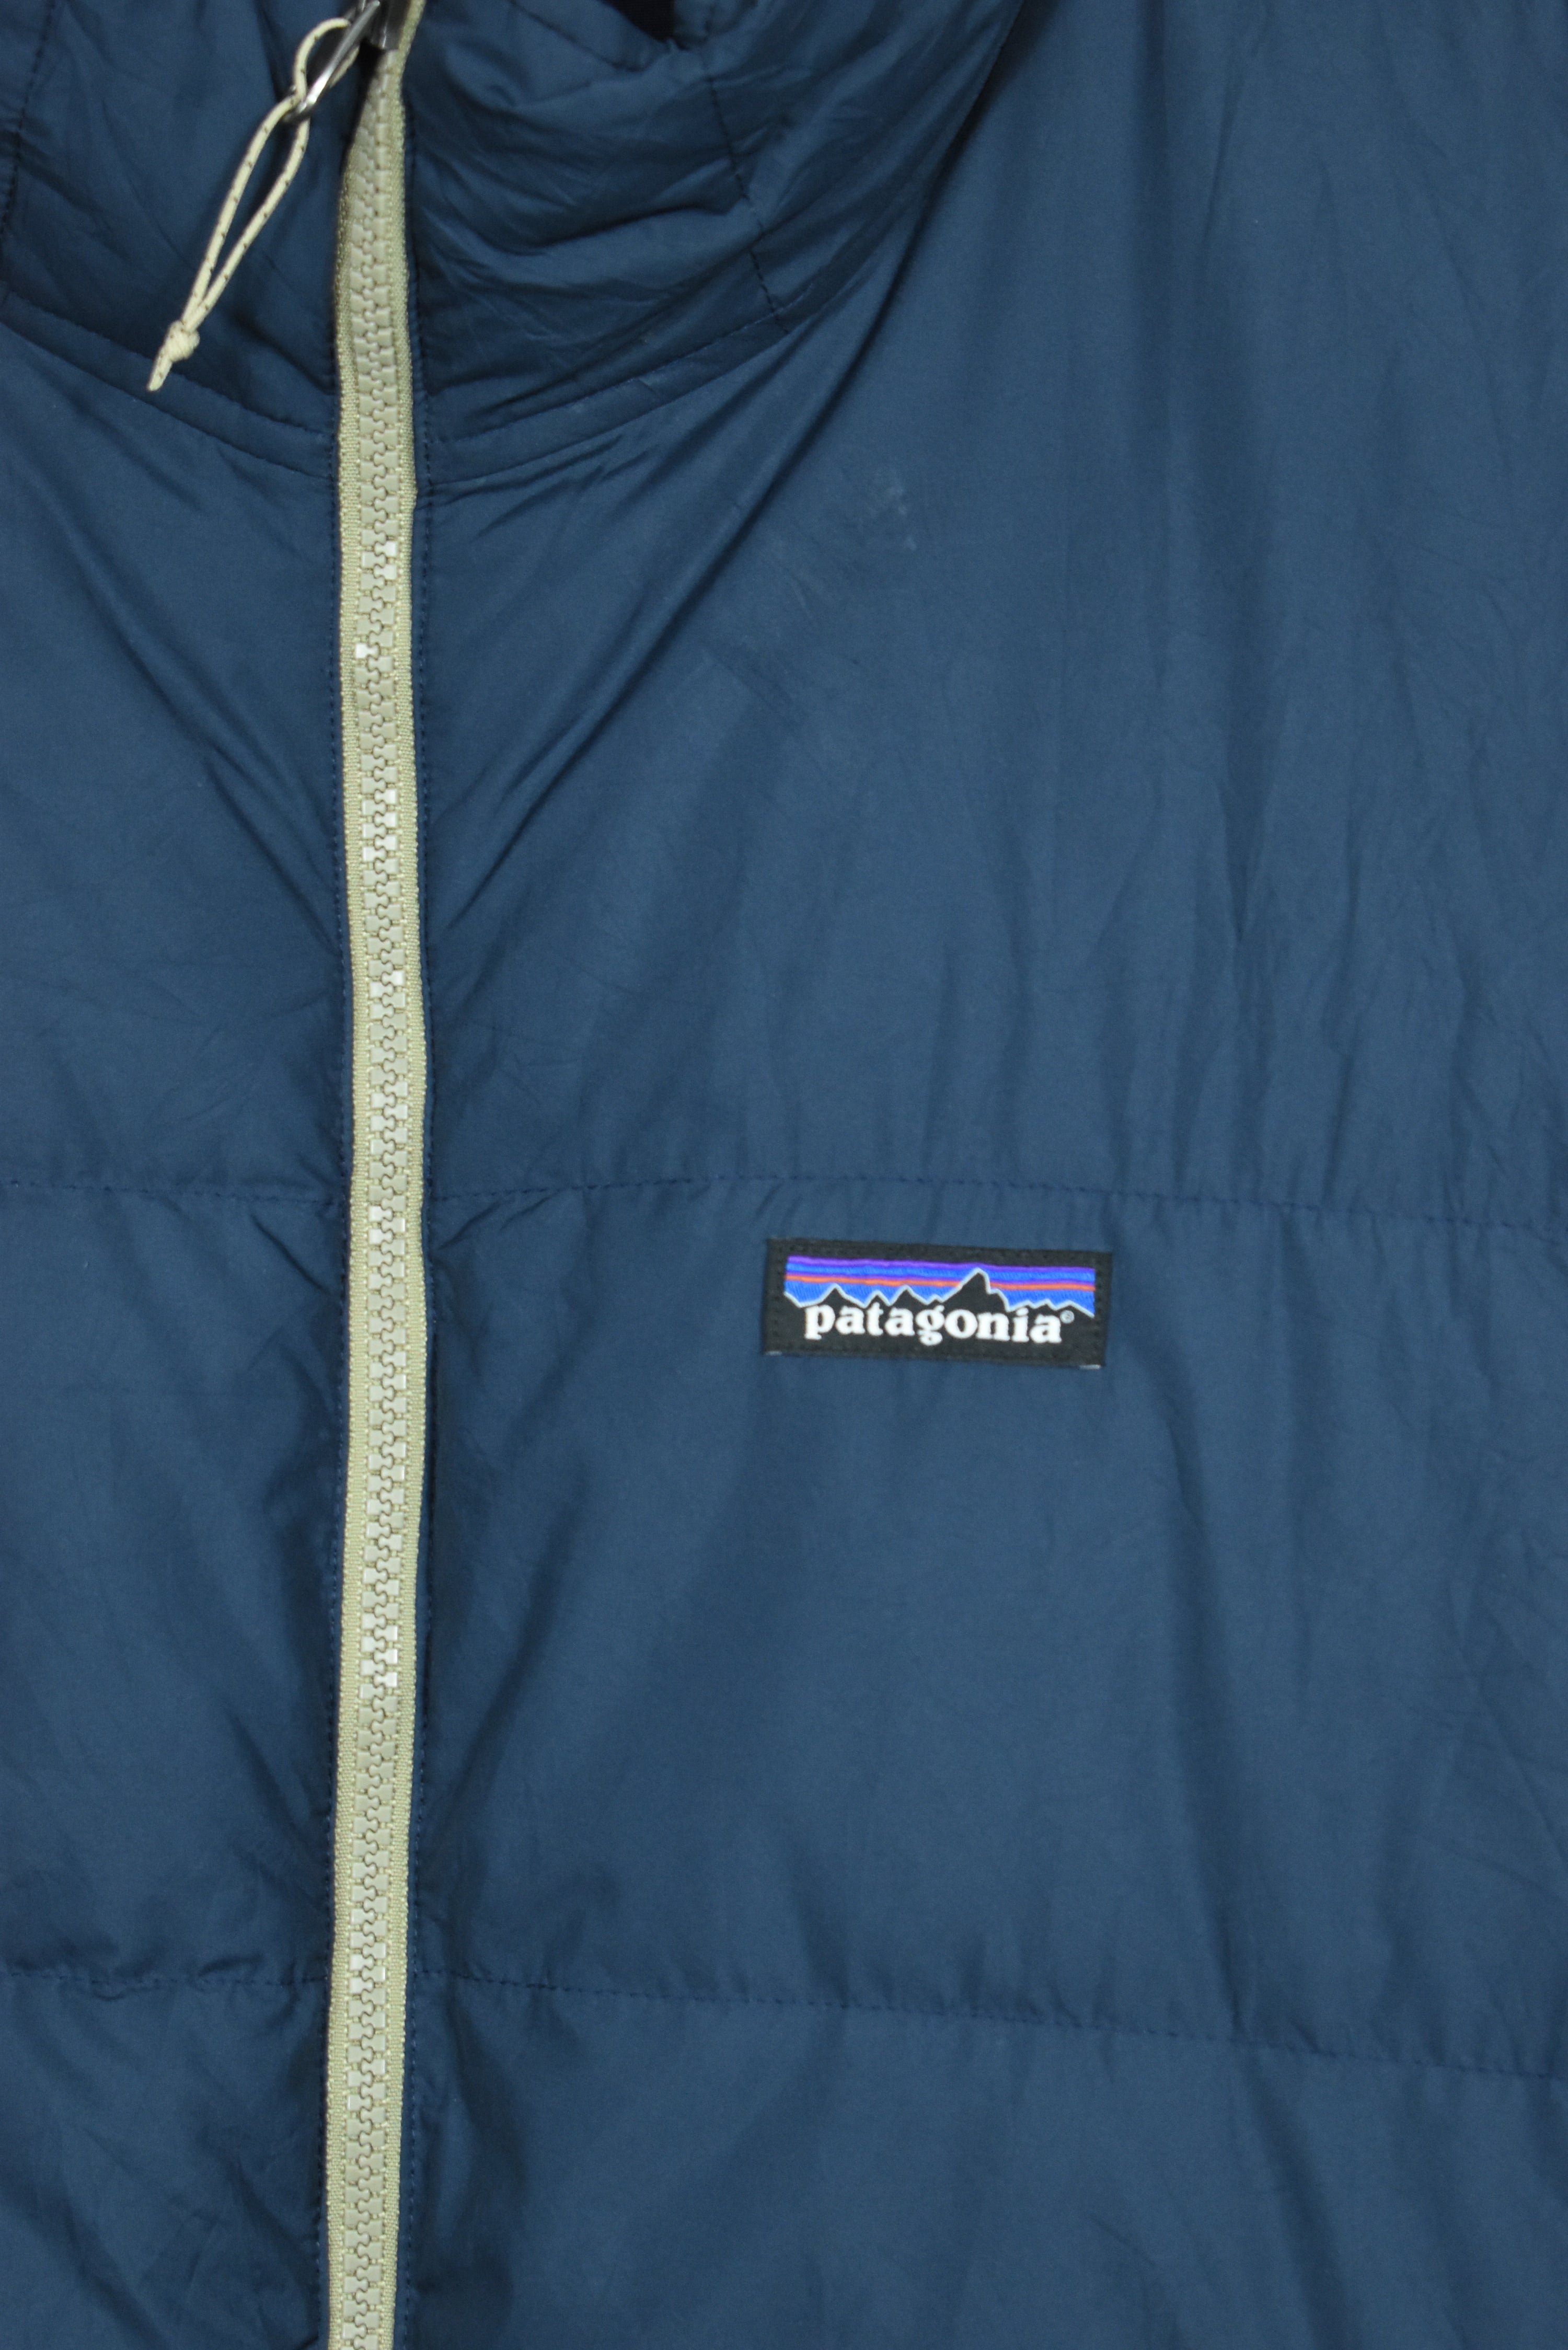 Vintage Patagonia Reversible Puffer Vest XLARGE